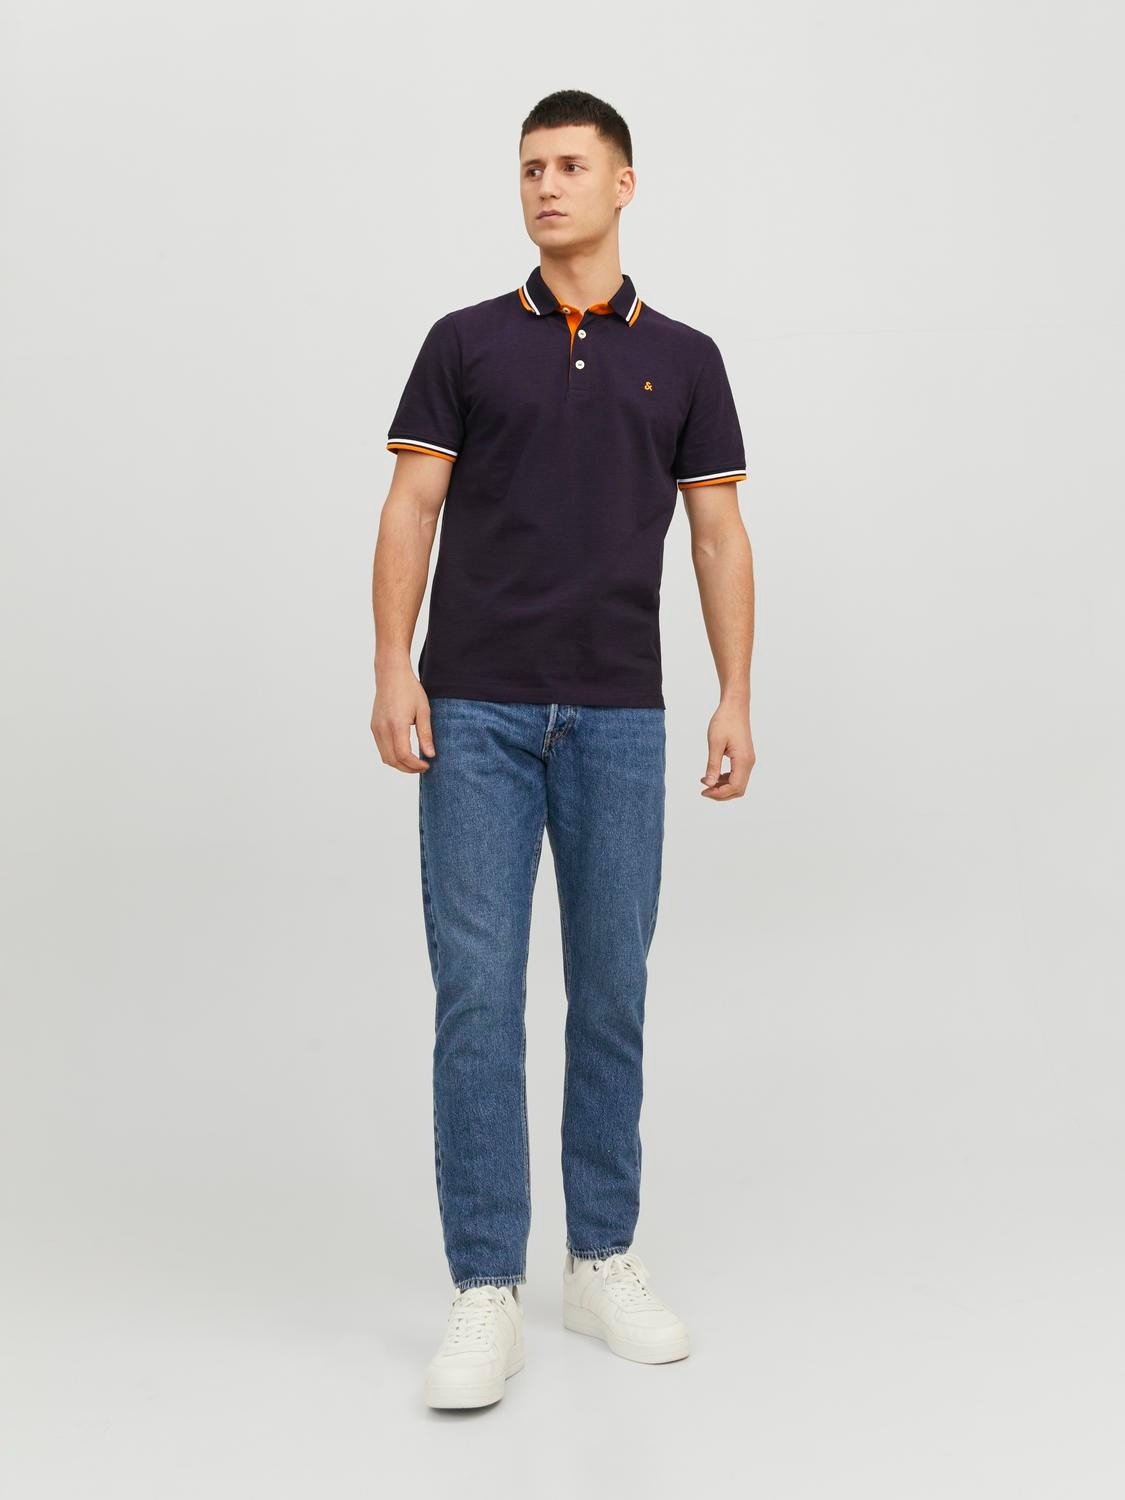 Plain Jersey Polo - Plum, Polo Shirts